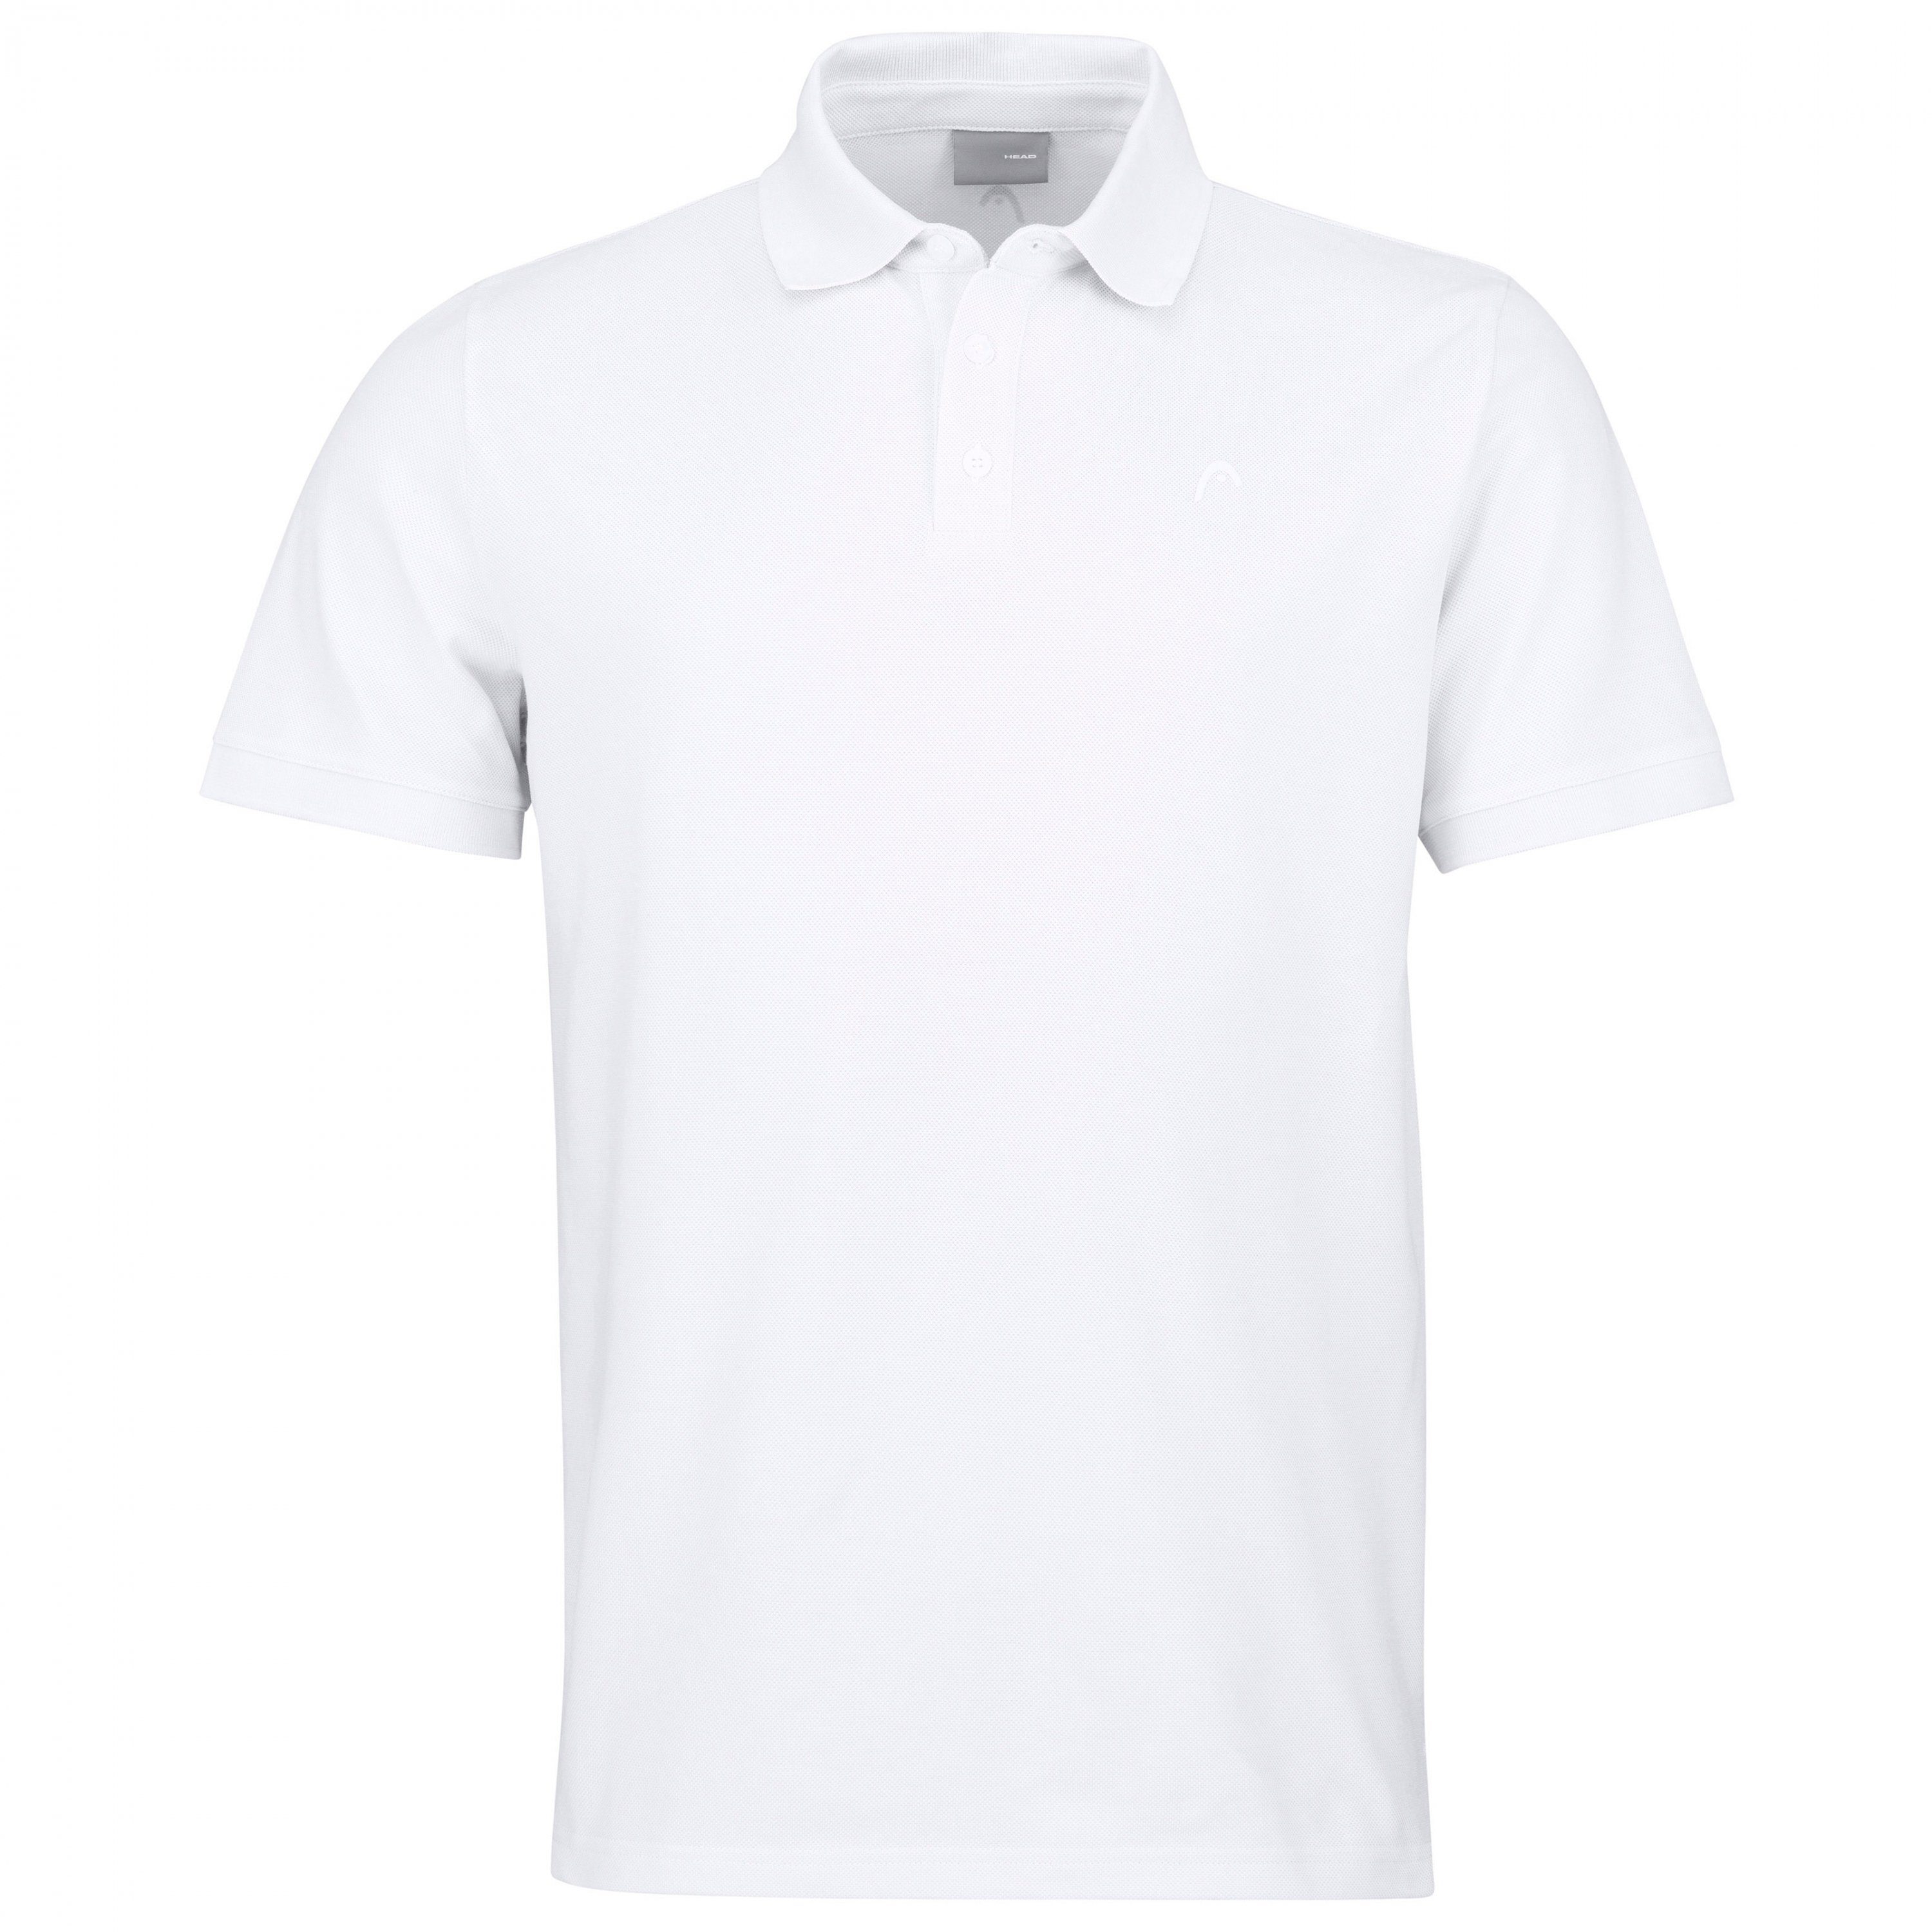 Head Tennisshirt WH Head white Polo Shirt Herren